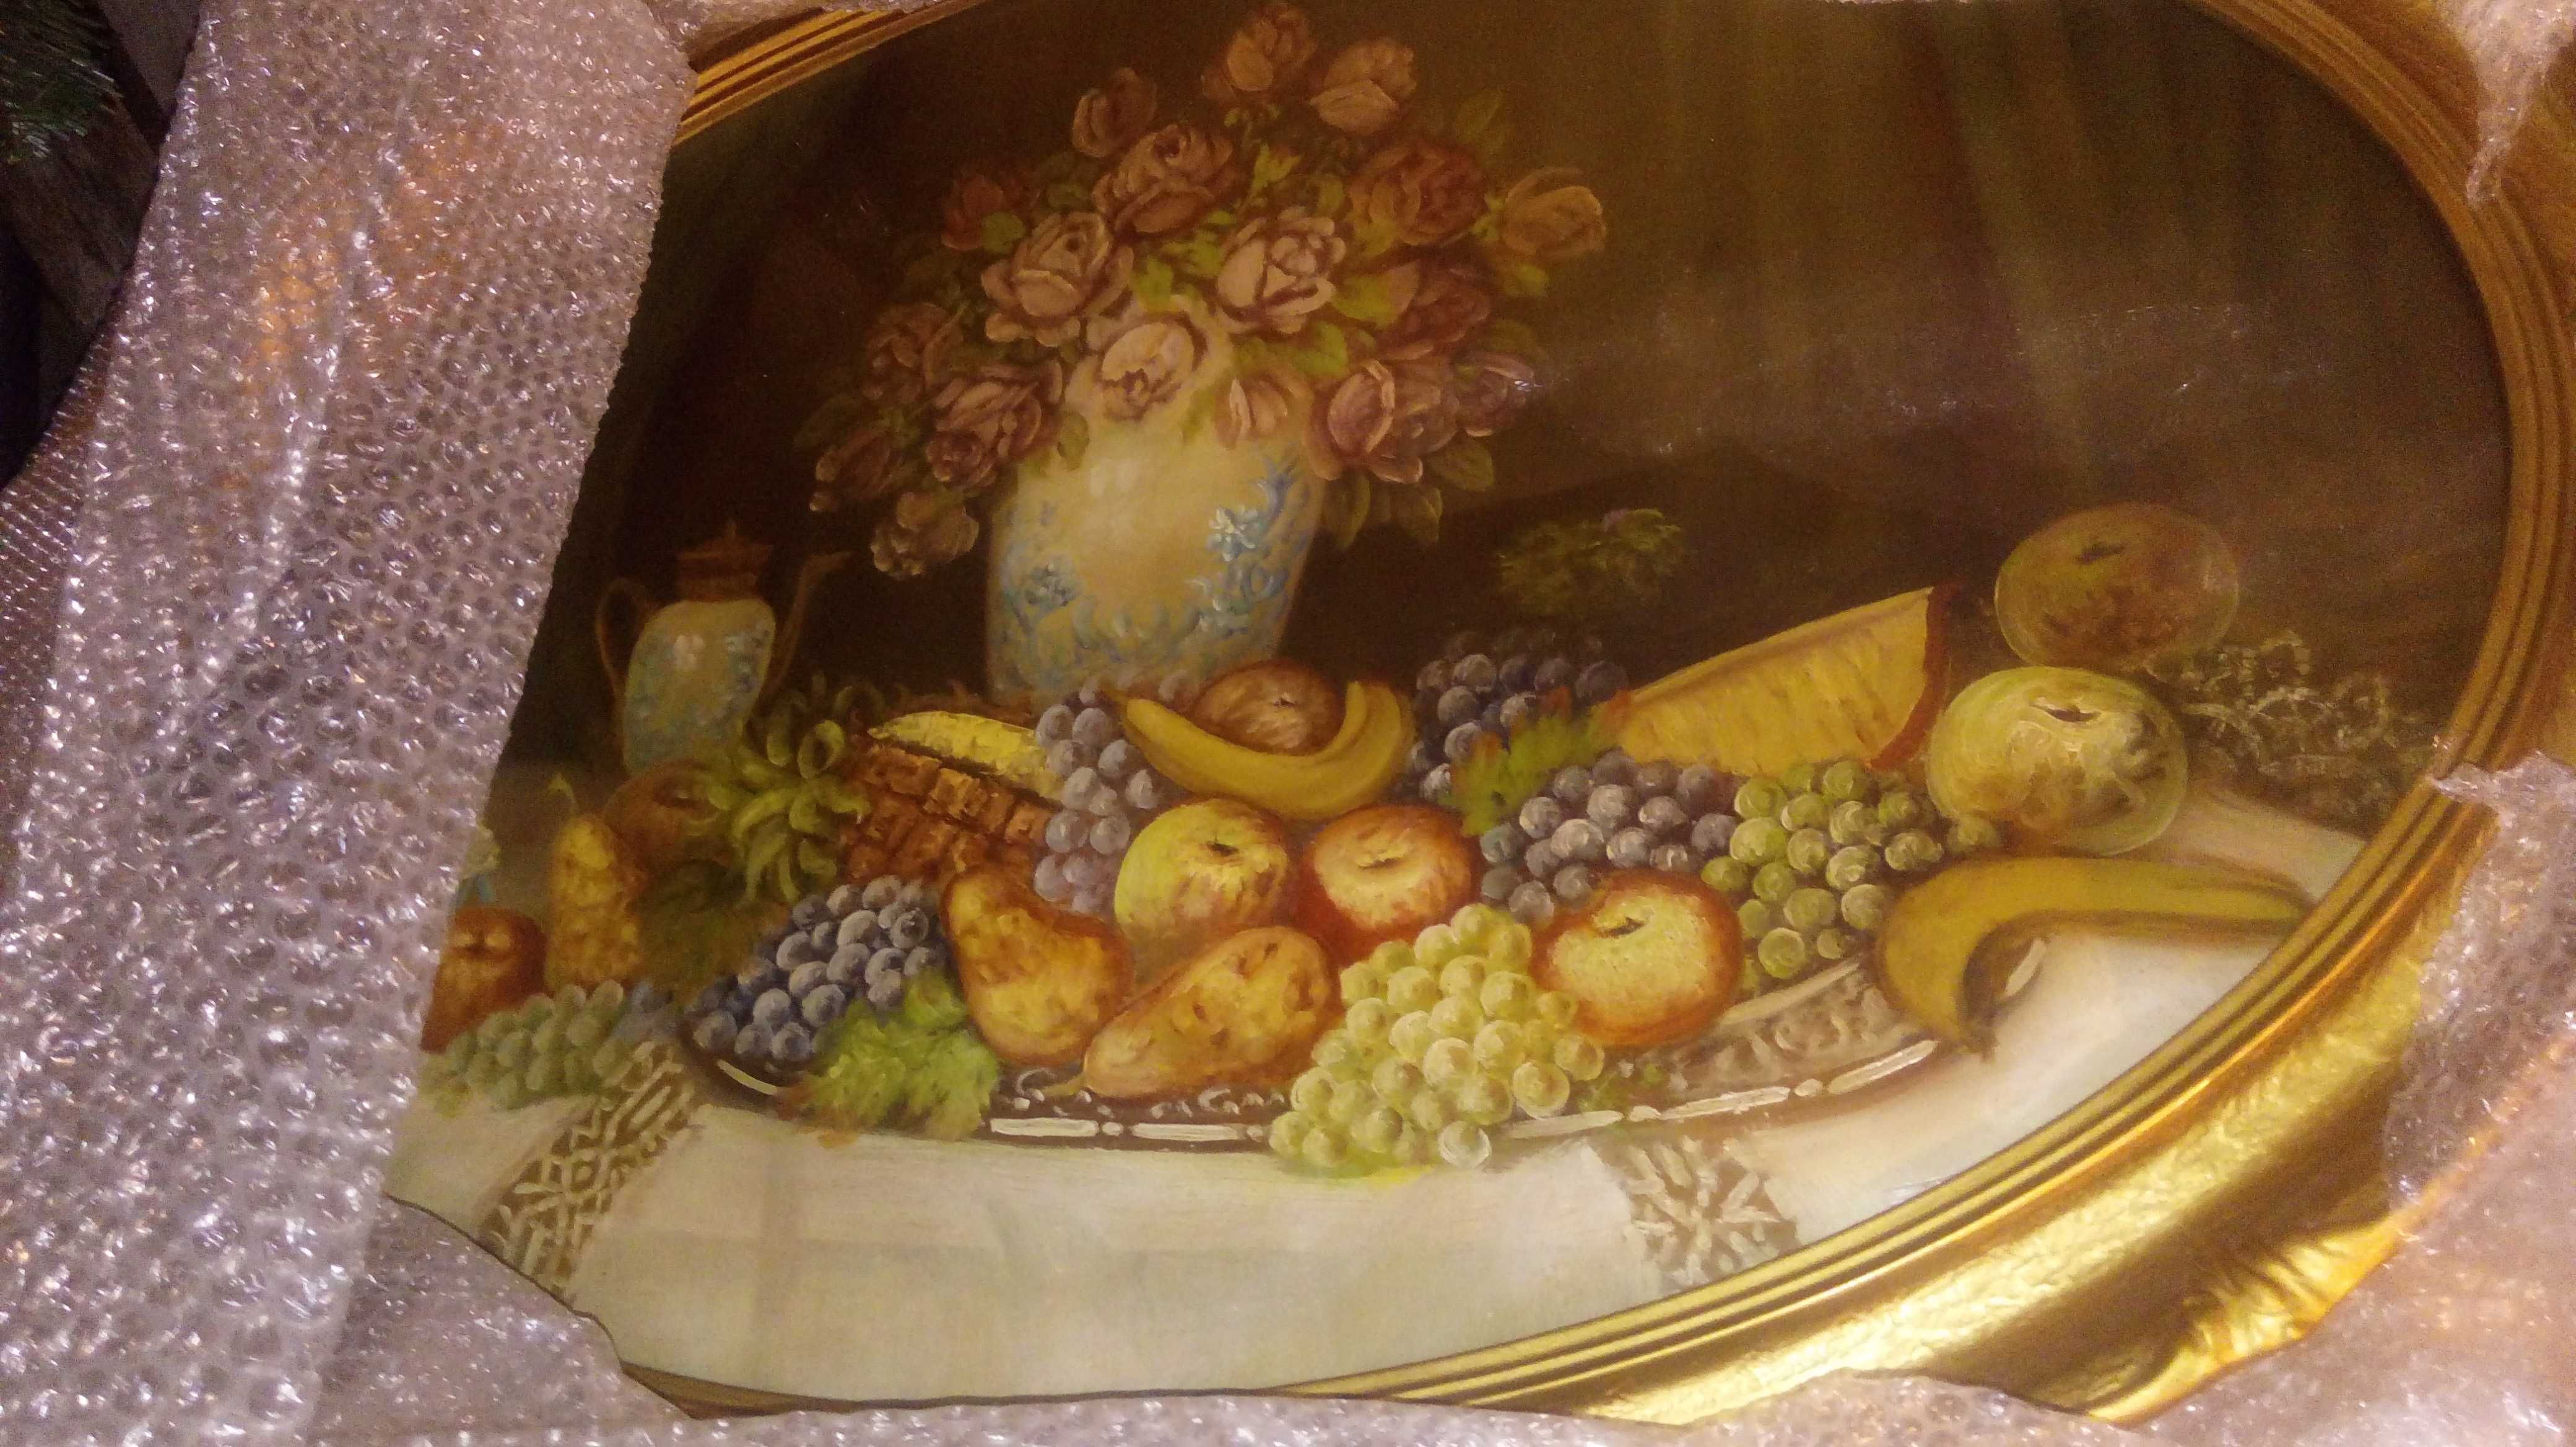 Obraz z lat 70-80 owoce